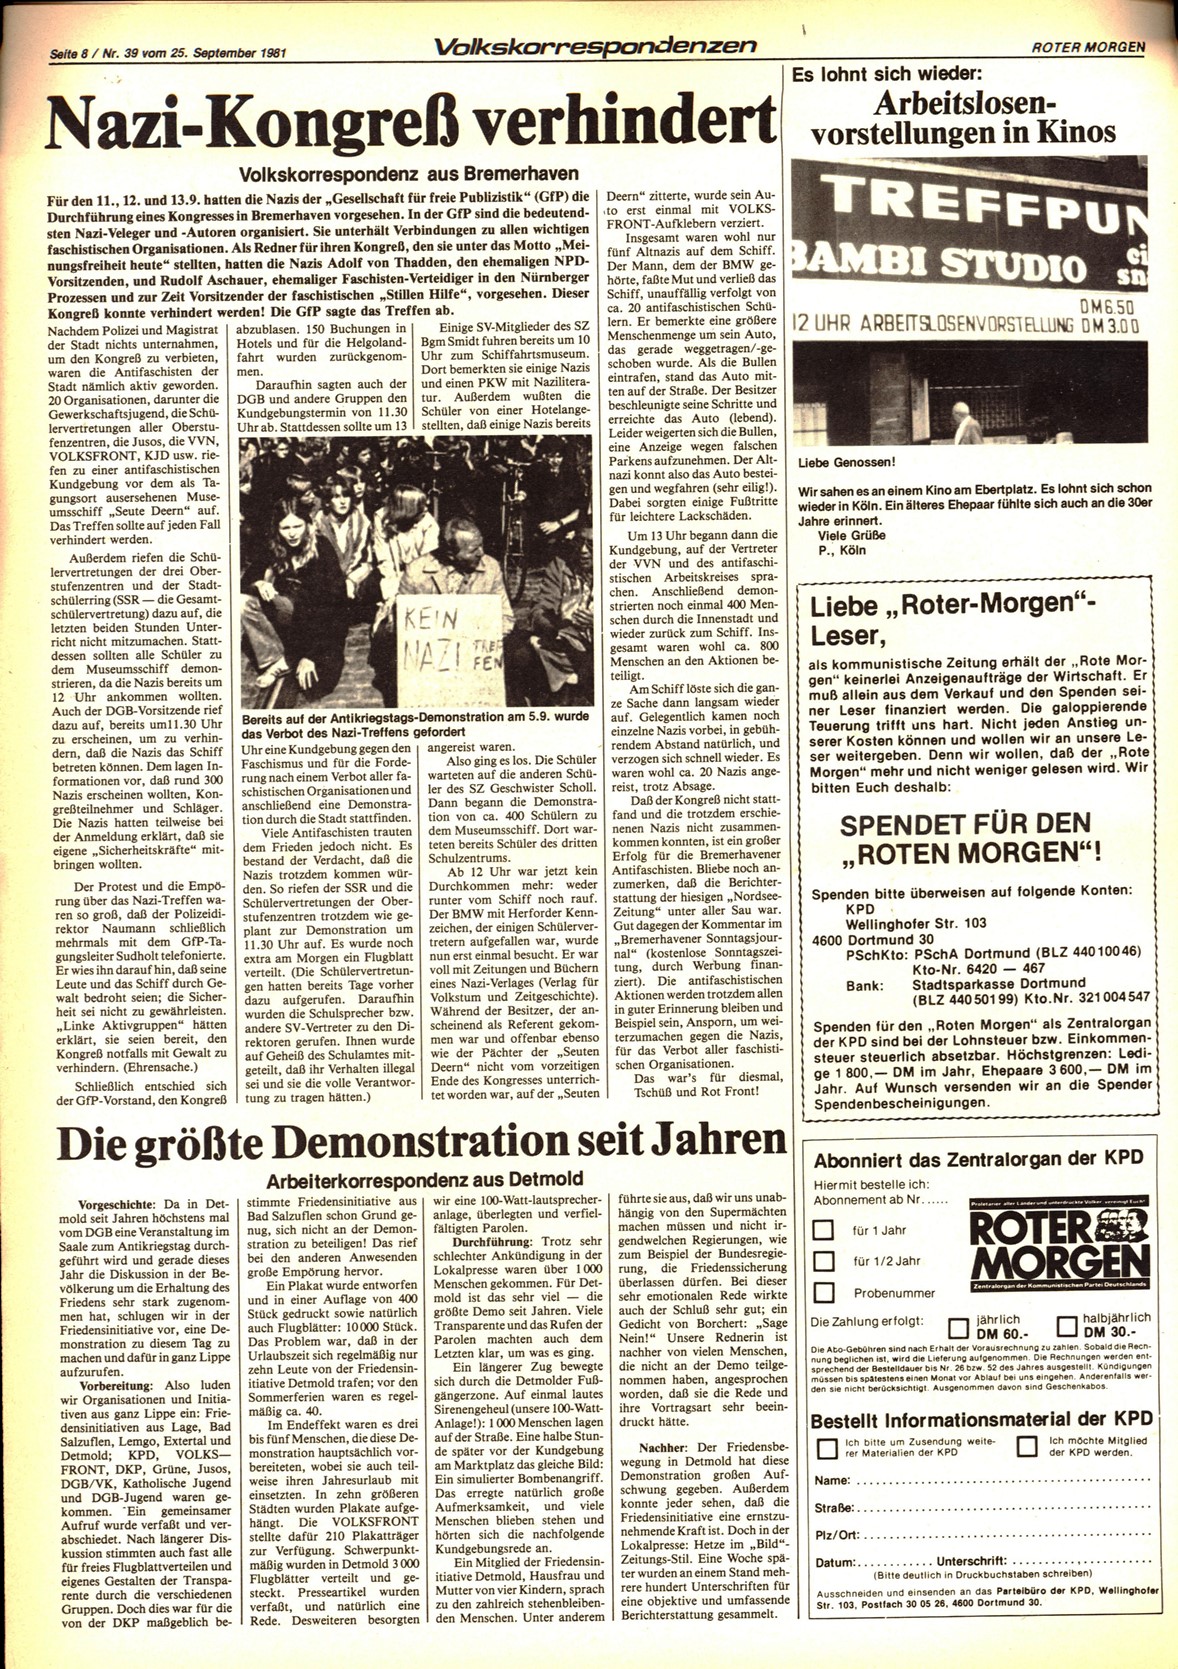 Roter Morgen, 15. Jg., 25. September 1981, Nr. 39, Seite 8